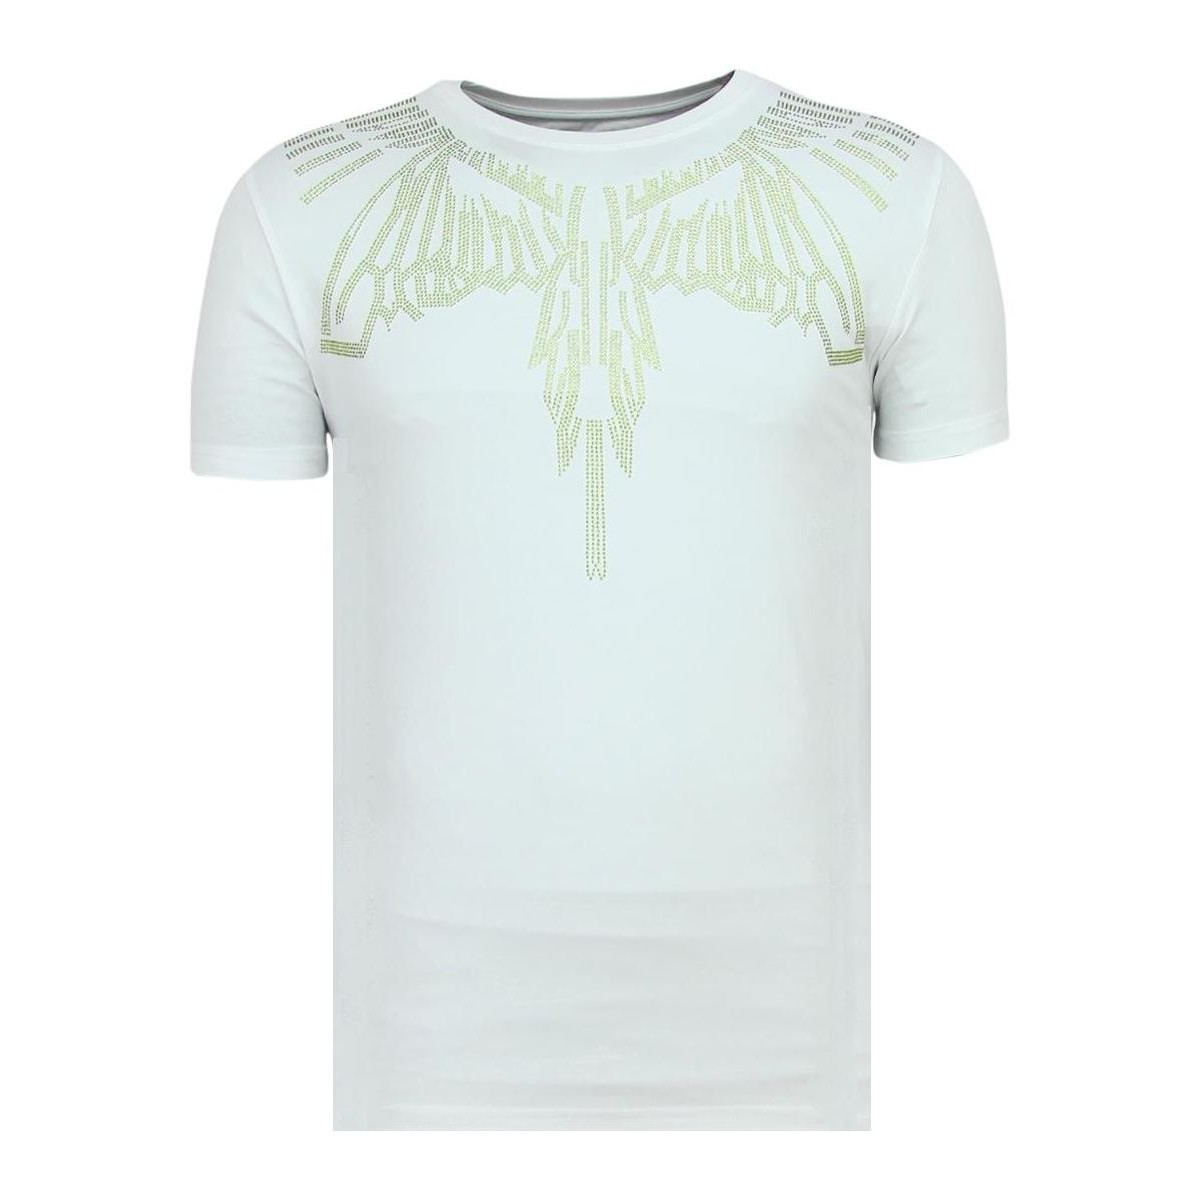 textil Herr T-shirts Local Fanatic Eagle Glitter Rhinestones A Kläder Vit